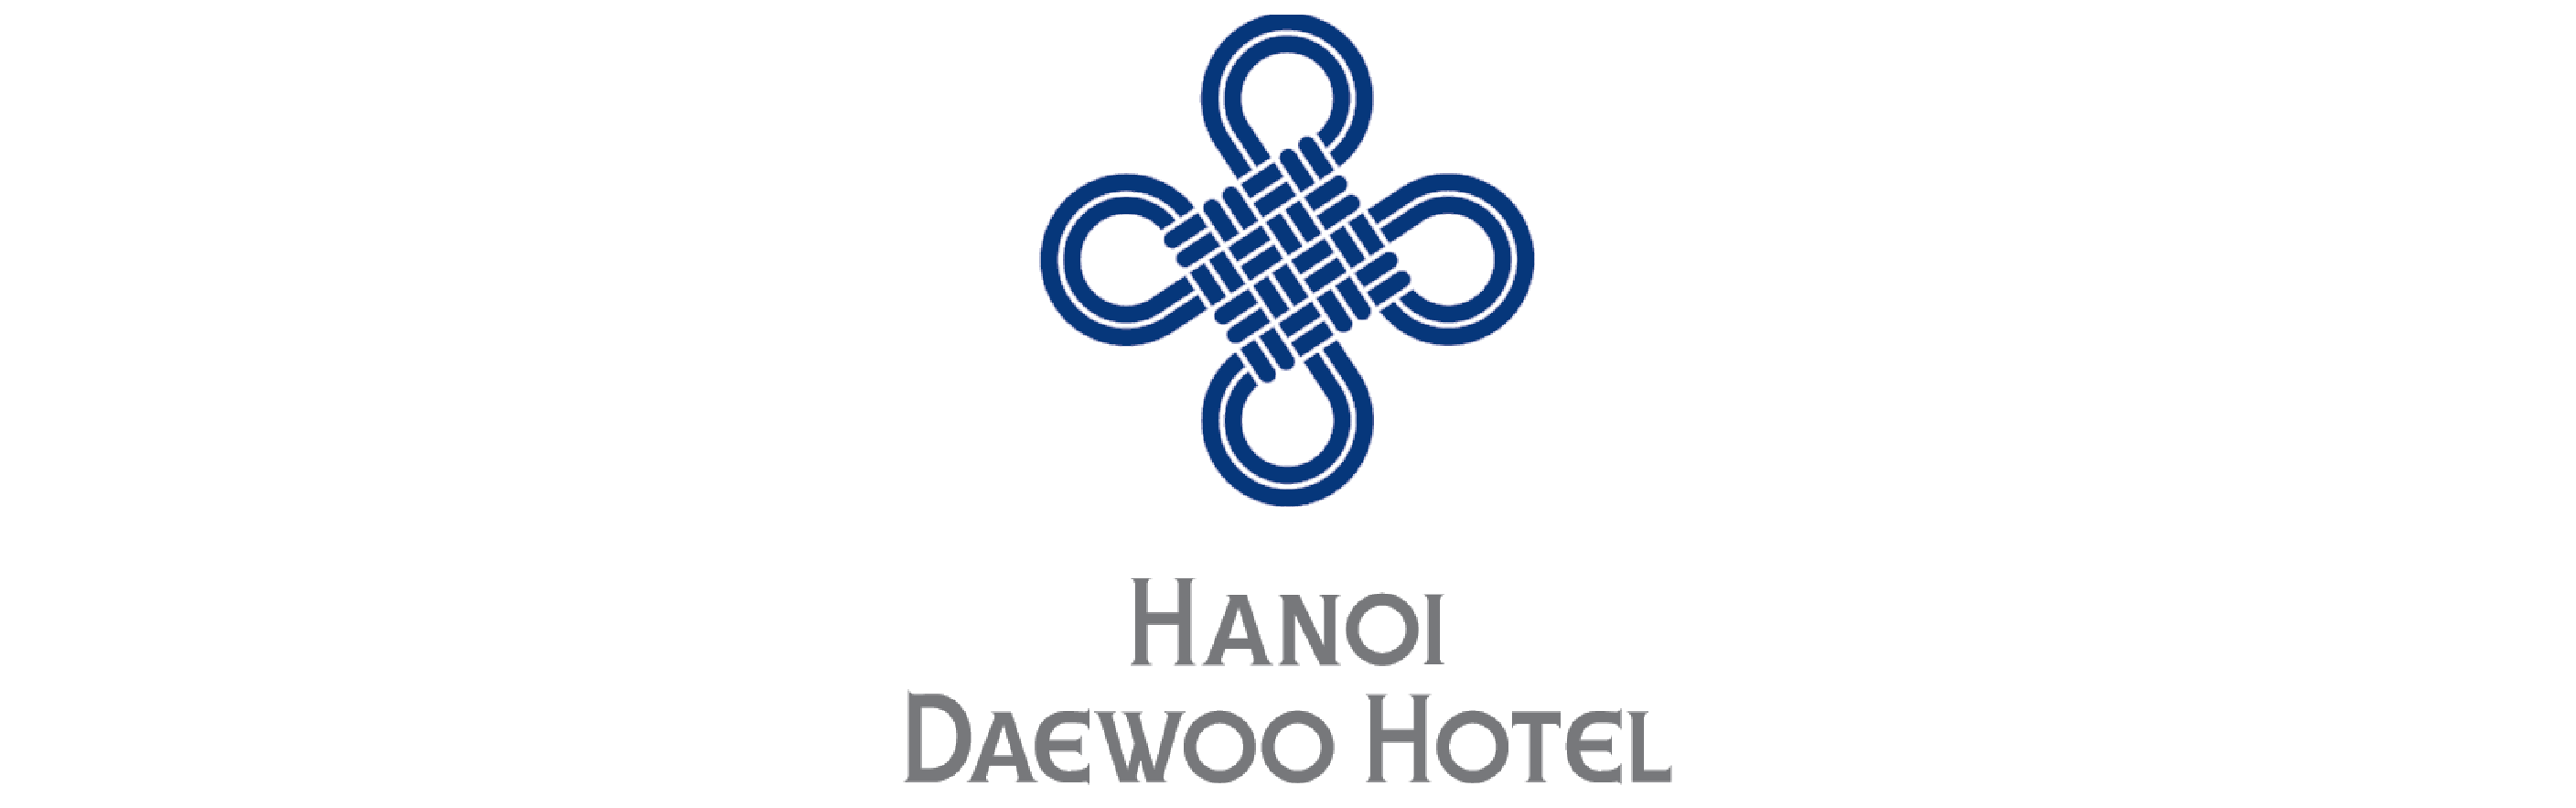 HANOI DEAWOO HOTEL